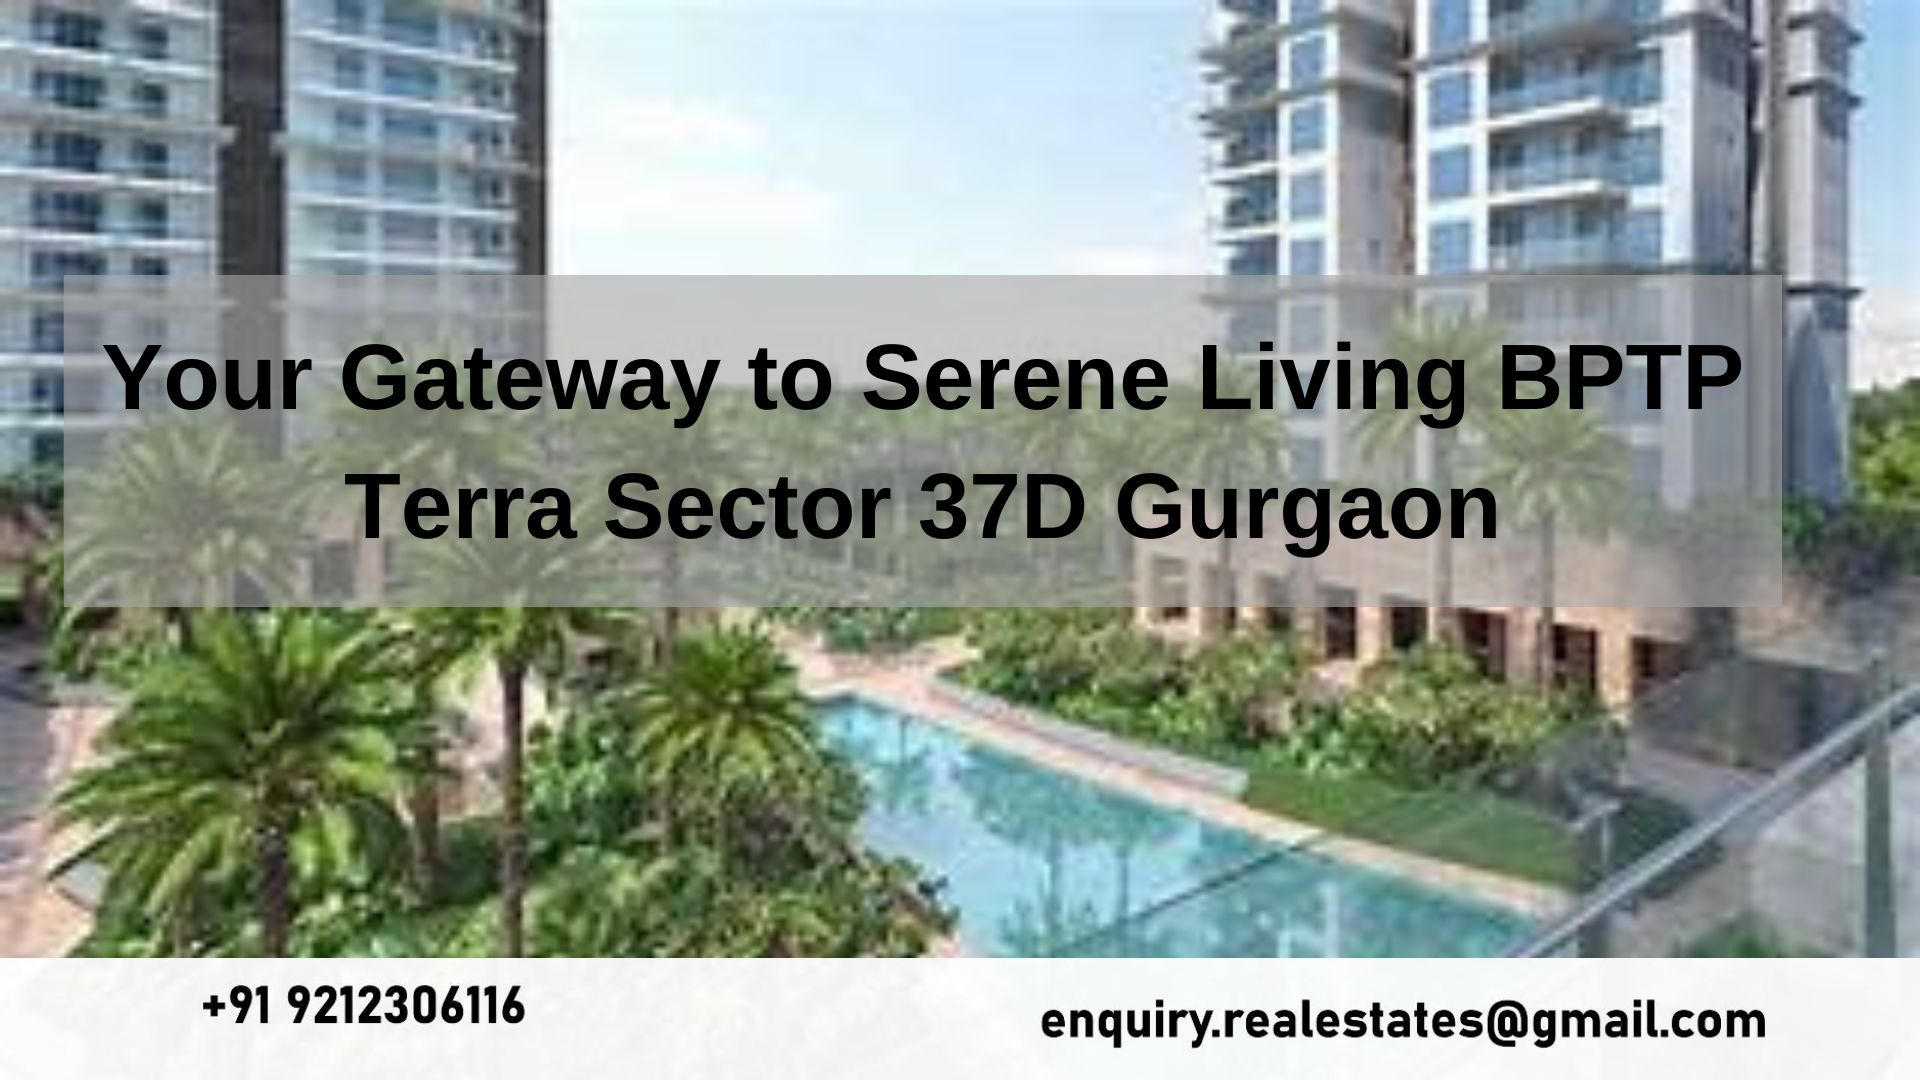 Your Gateway to Serene Living BPTP Terra Sector 37D Gurgaon